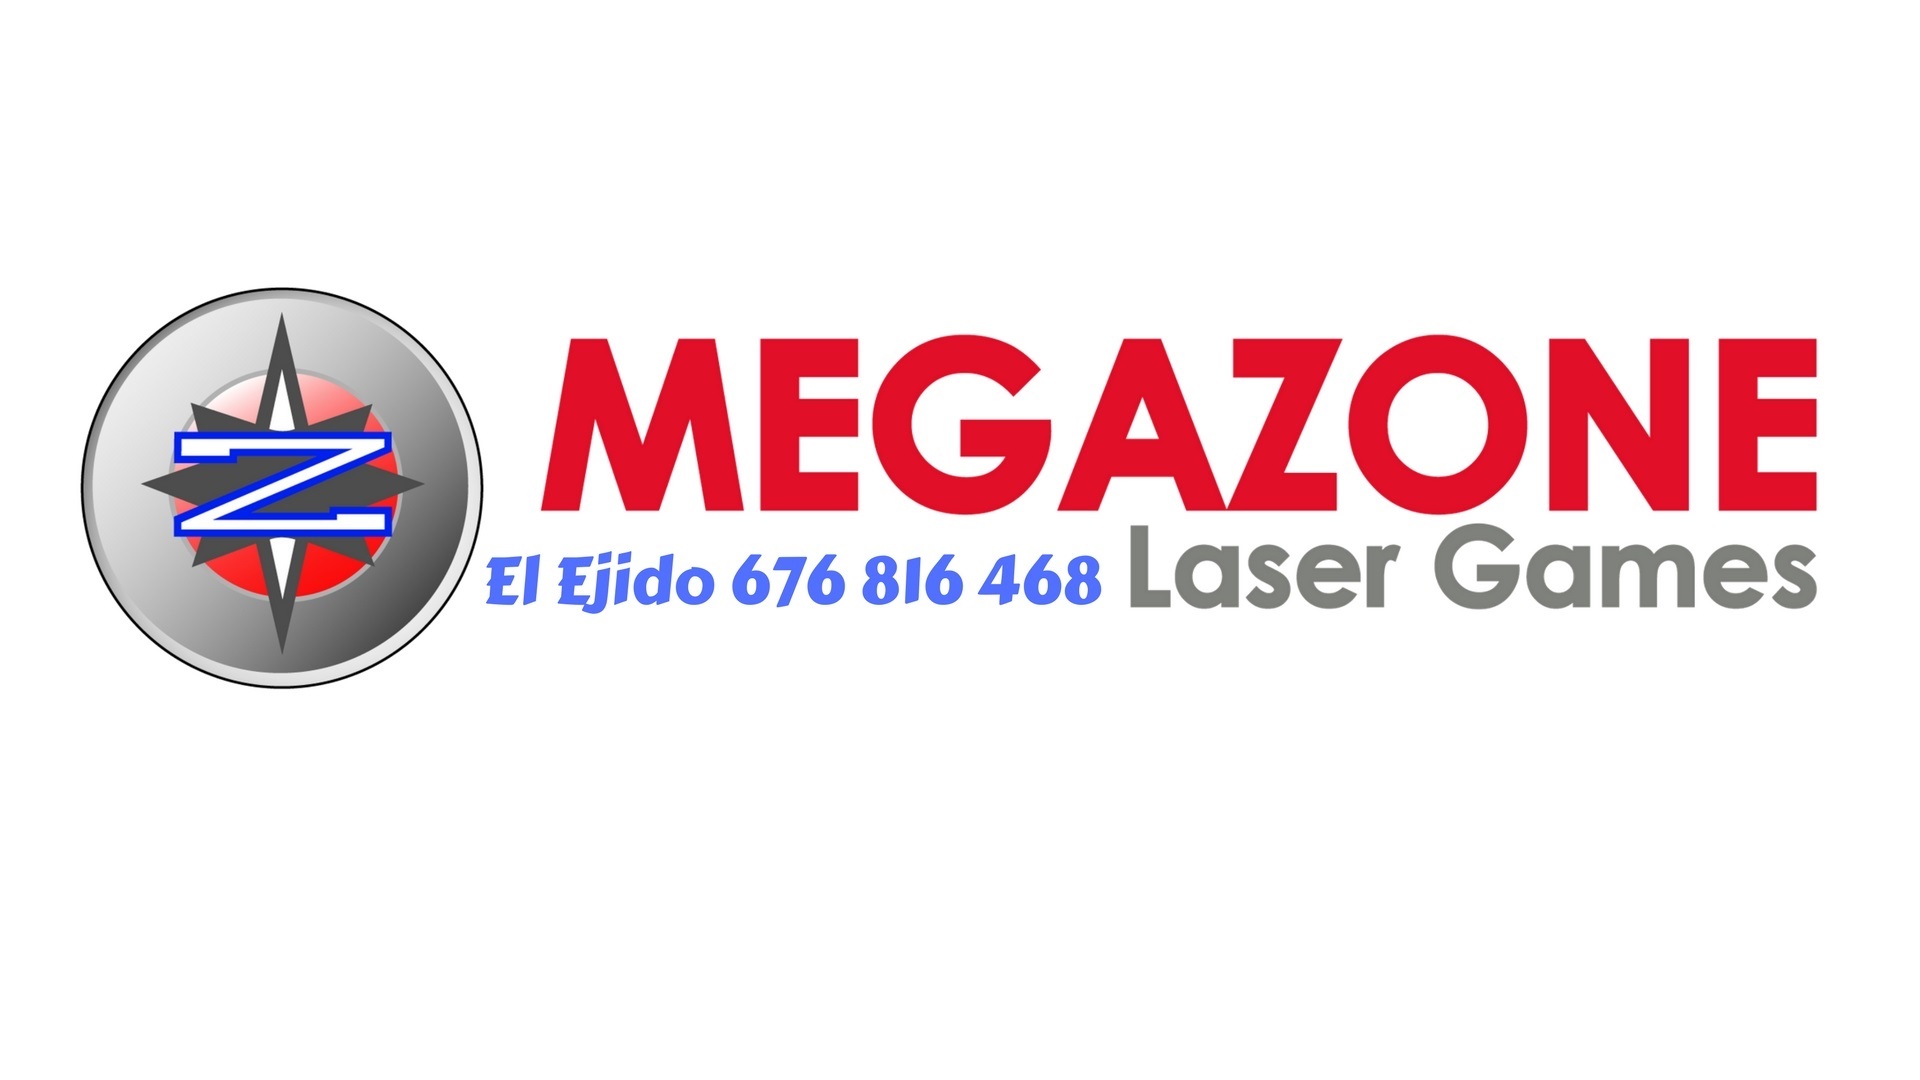 Megazone Laser Games